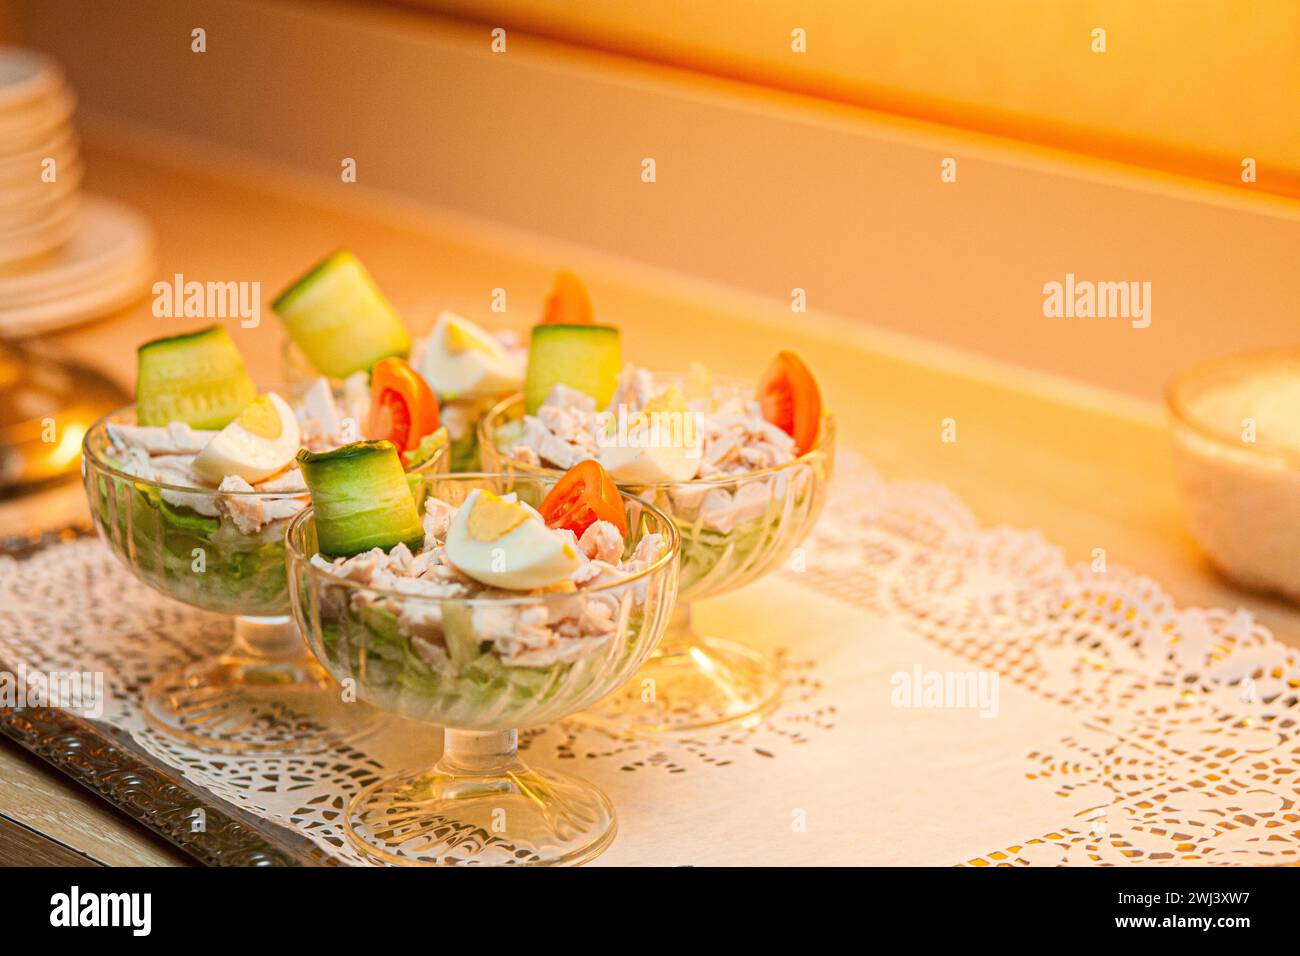 Savory Delight: Fresh Salad Presentation in Glass Bowls Stock Photo